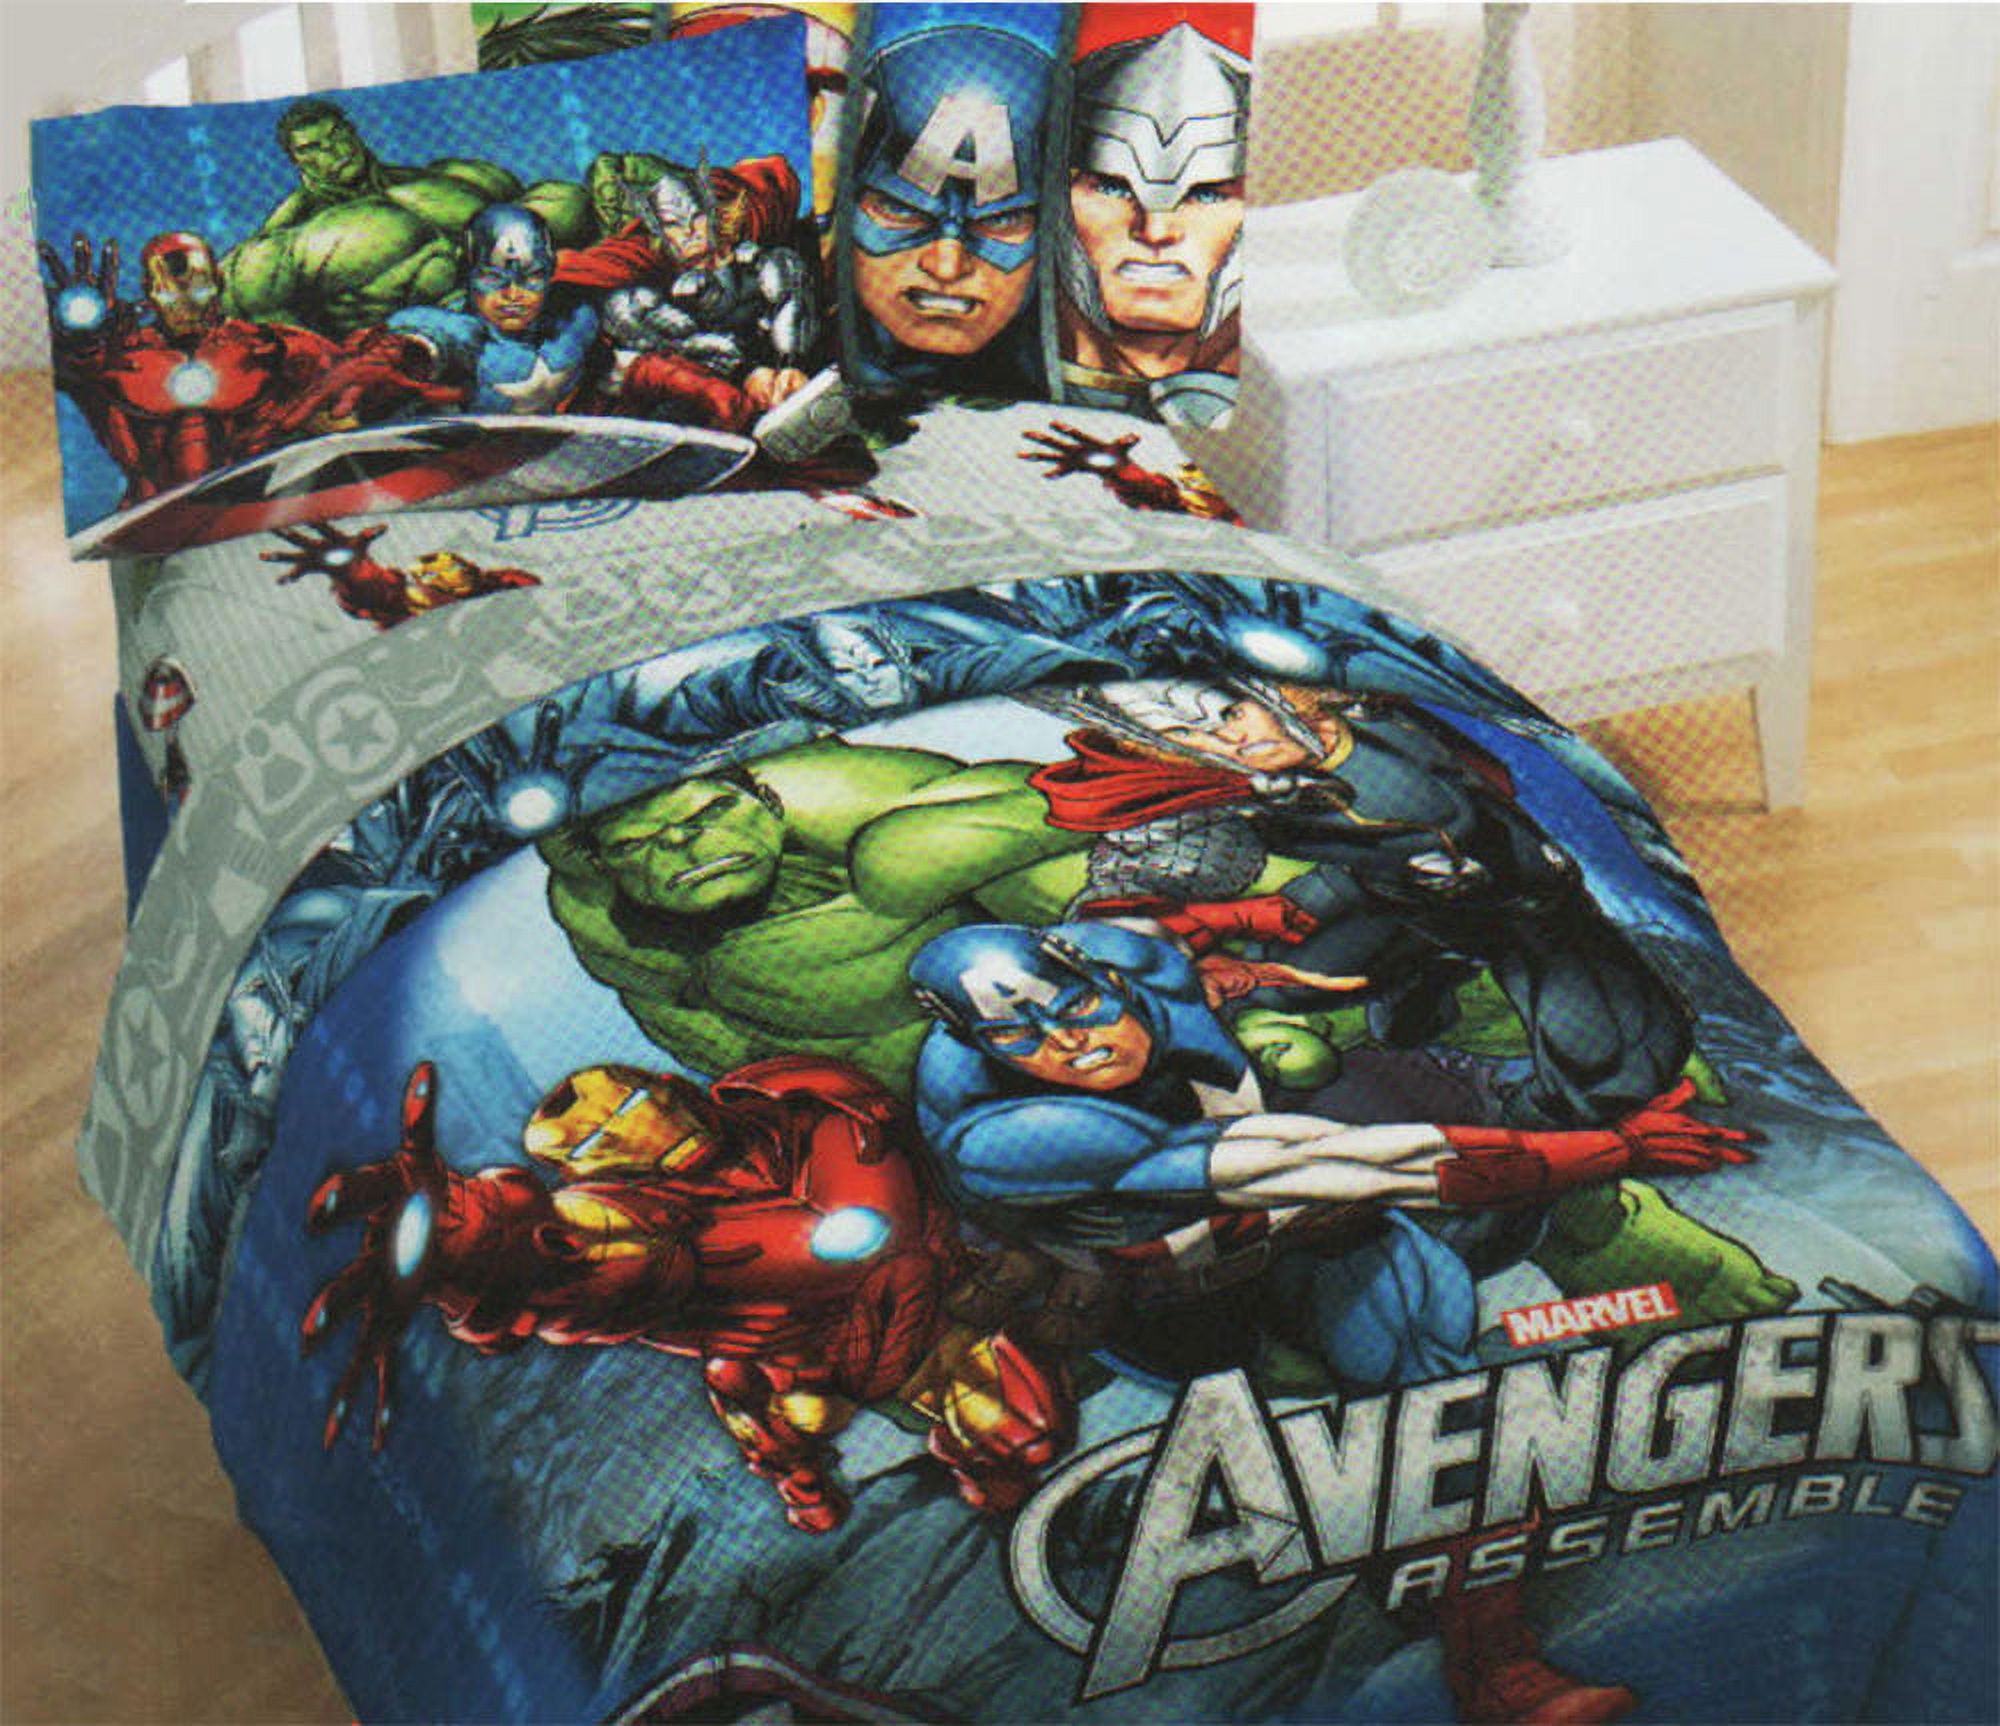 Marvel Avengers "Halo" Twin Size Reversible Comforter - image 2 of 4